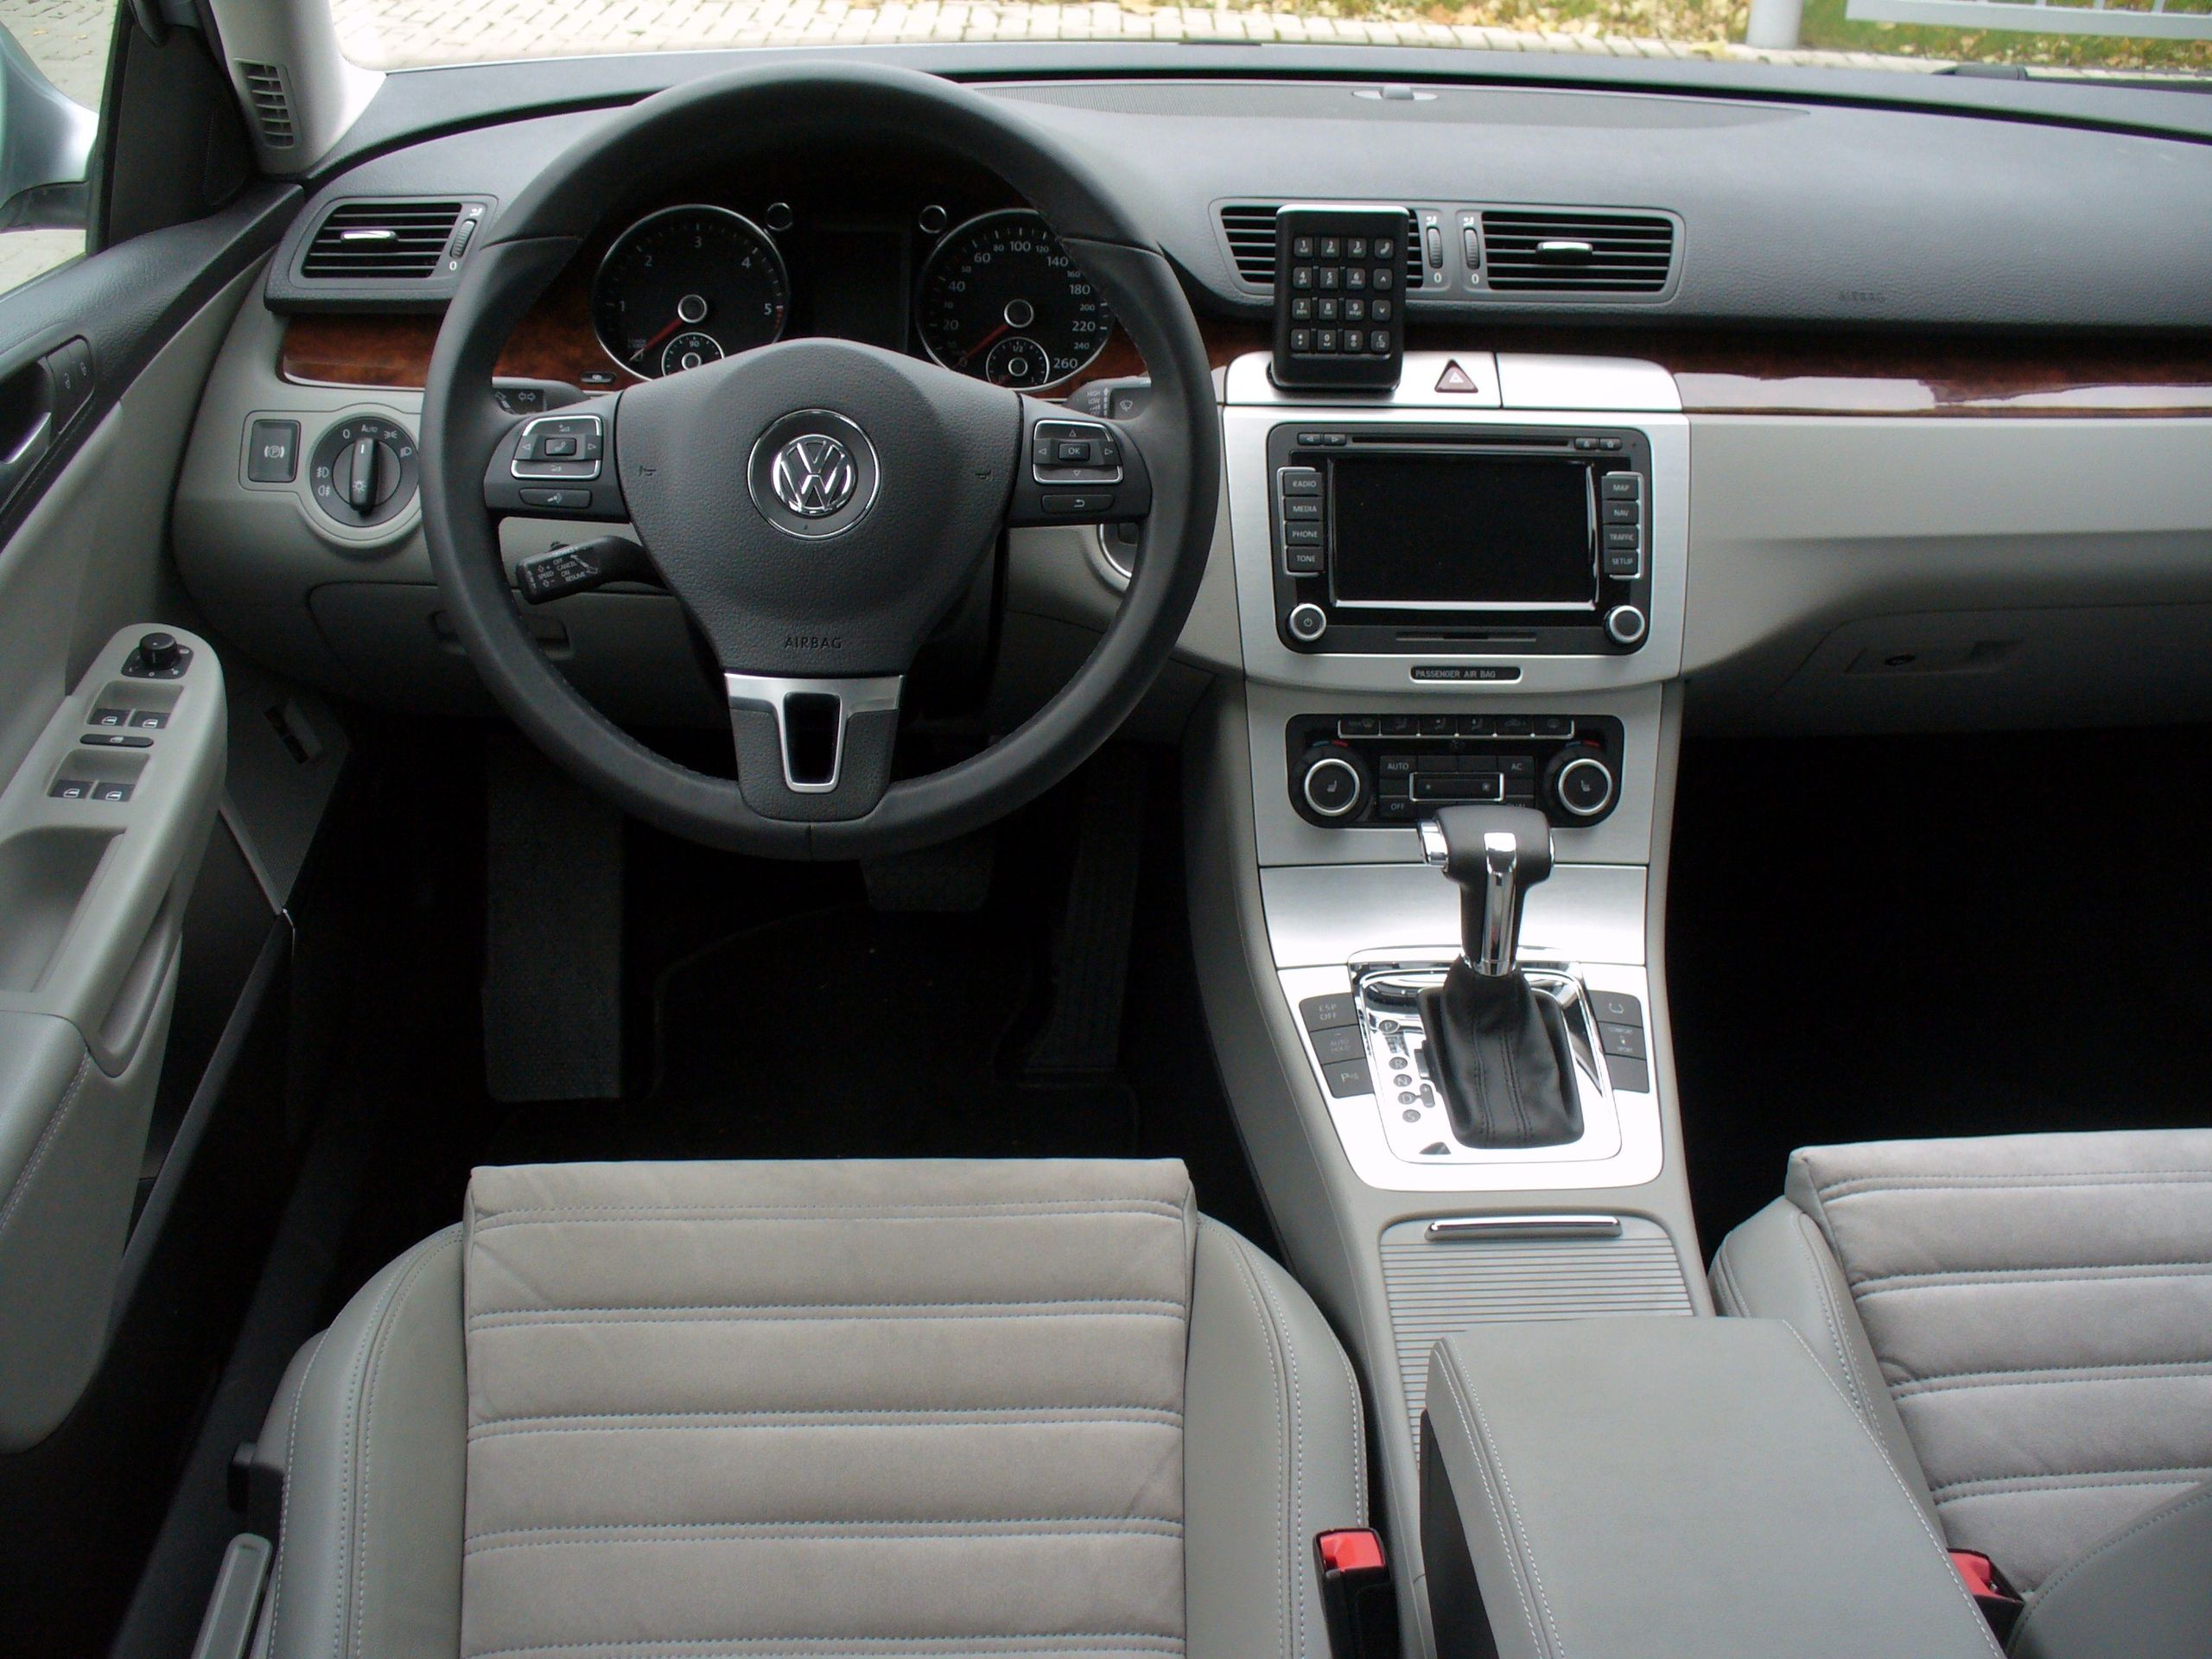 verschil vrijheid zoet File:VW Passat B6 Limousine 2.0 TDI DSG Highline Reflexsilber Interieur.JPG  - Wikimedia Commons